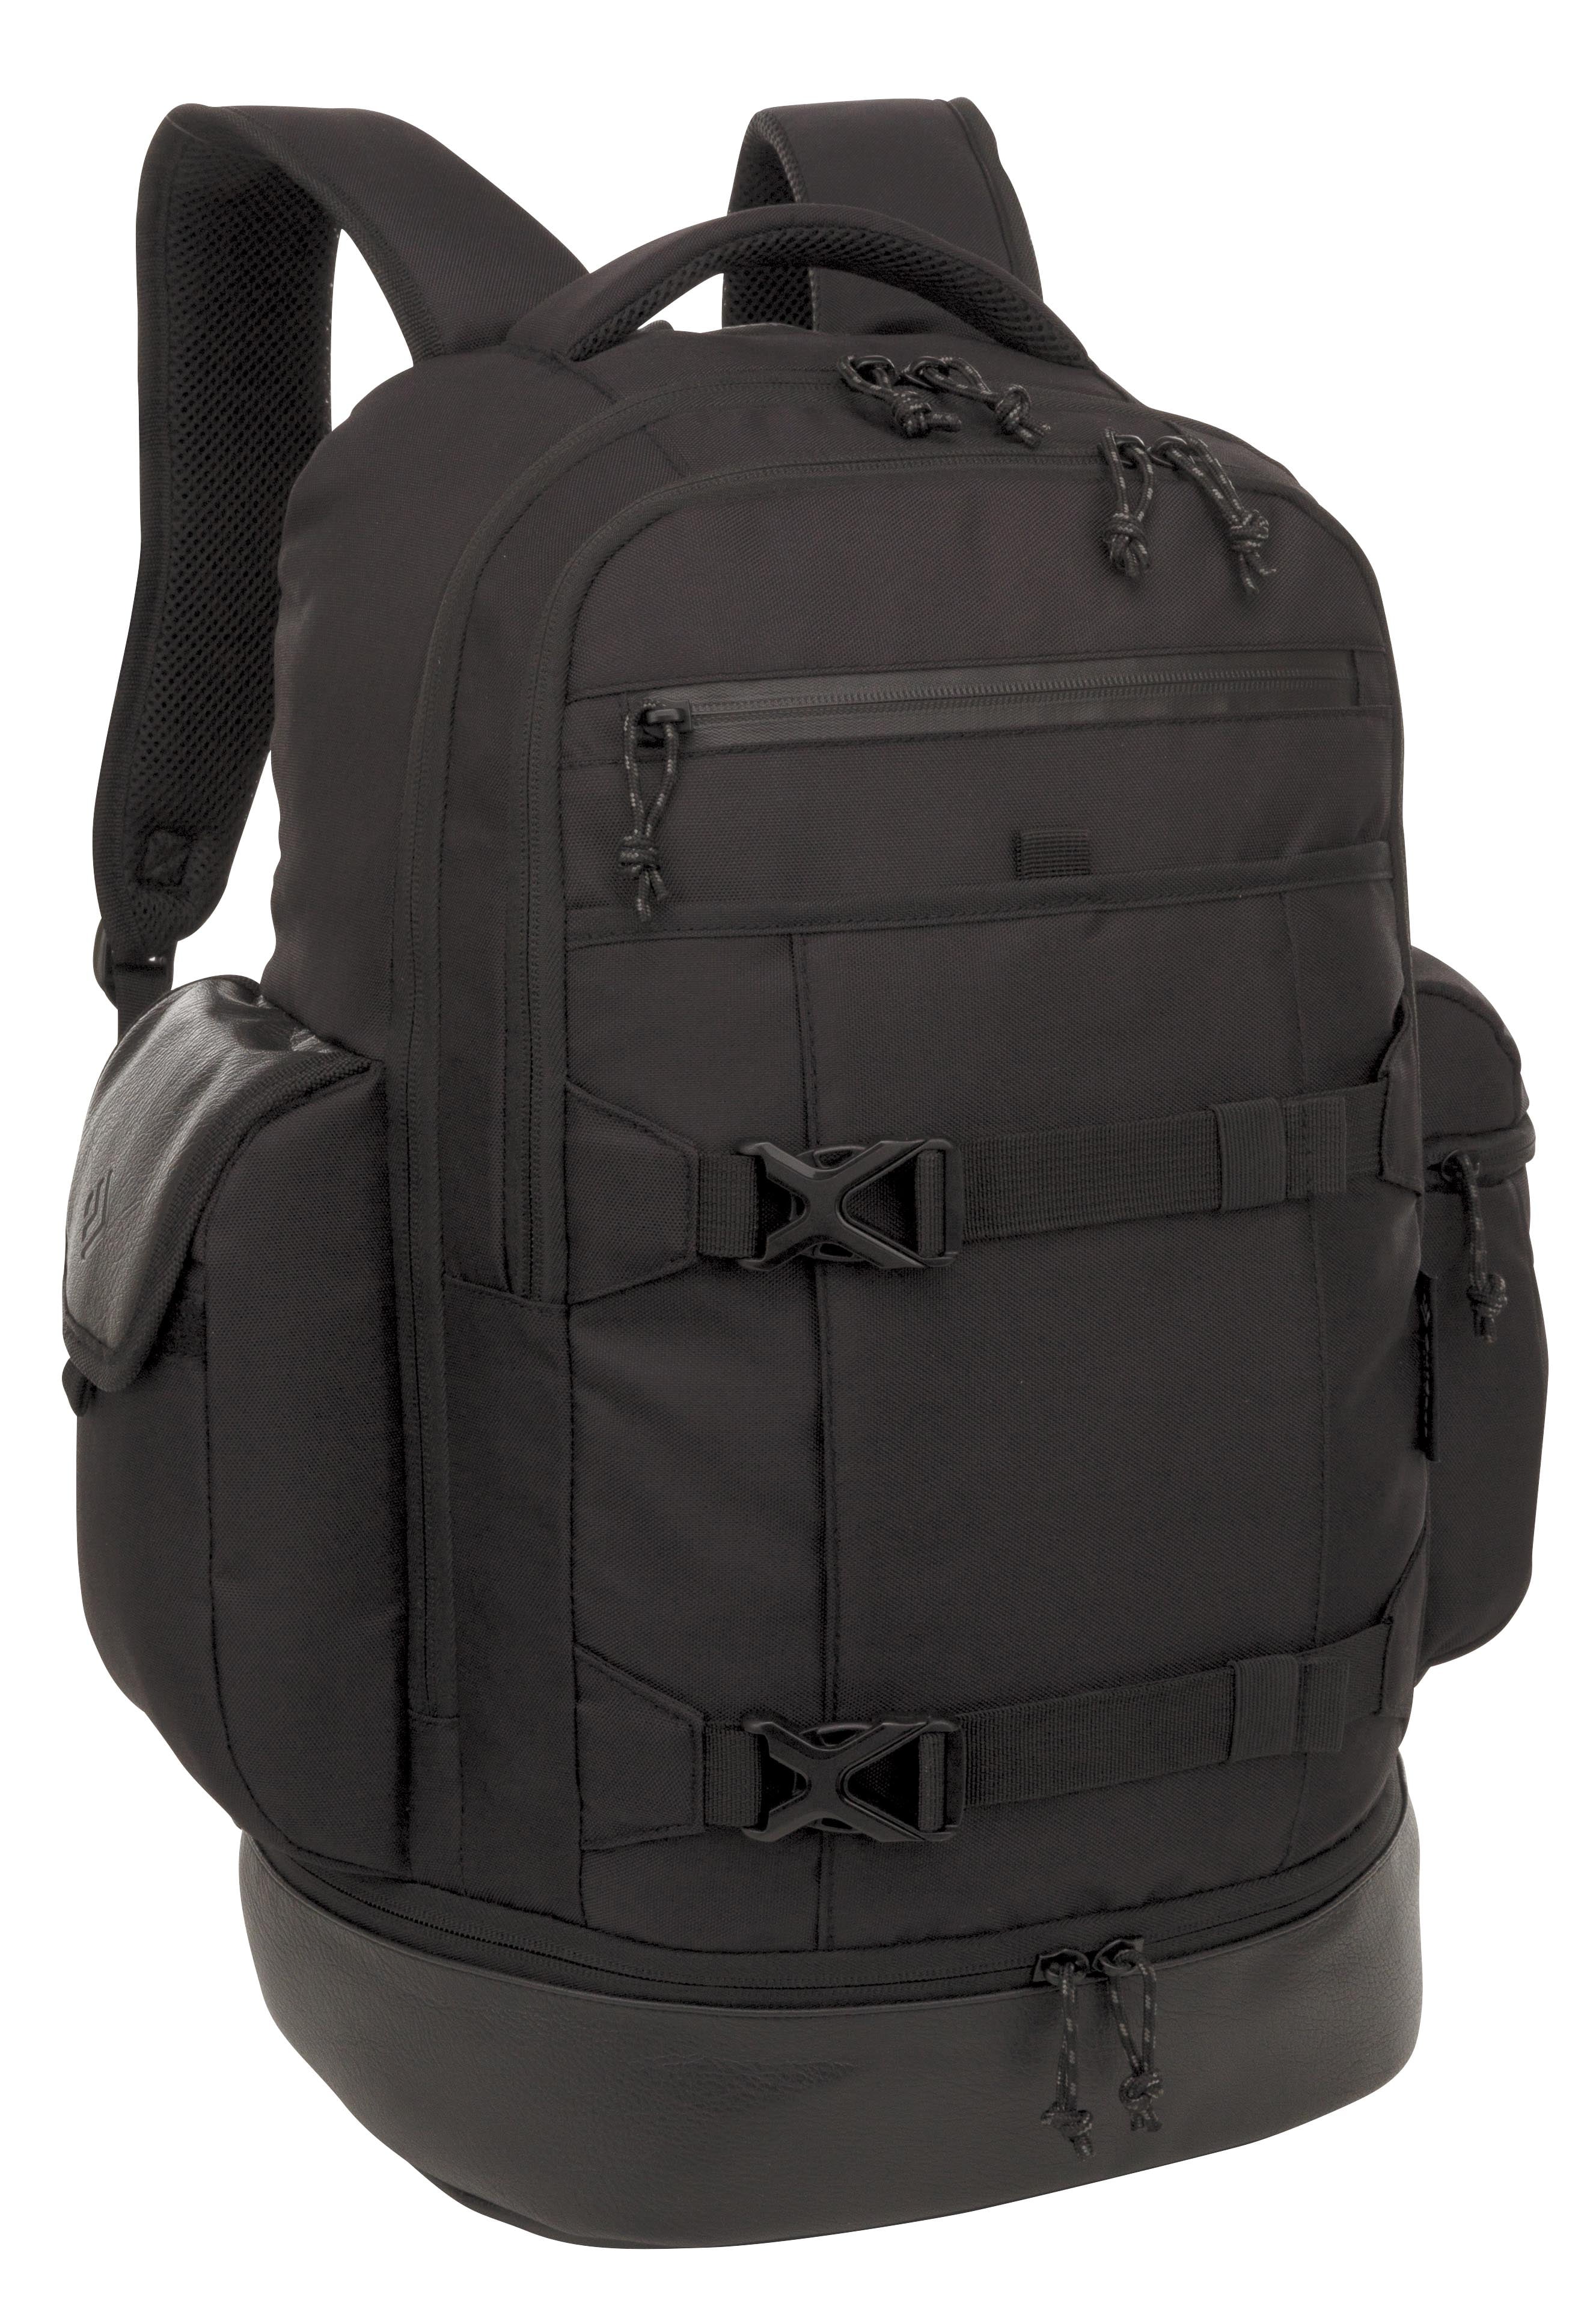 Outdoor Products Weekender 32 Ltr Backpack, Black, Unisex, Adult, Teen ...